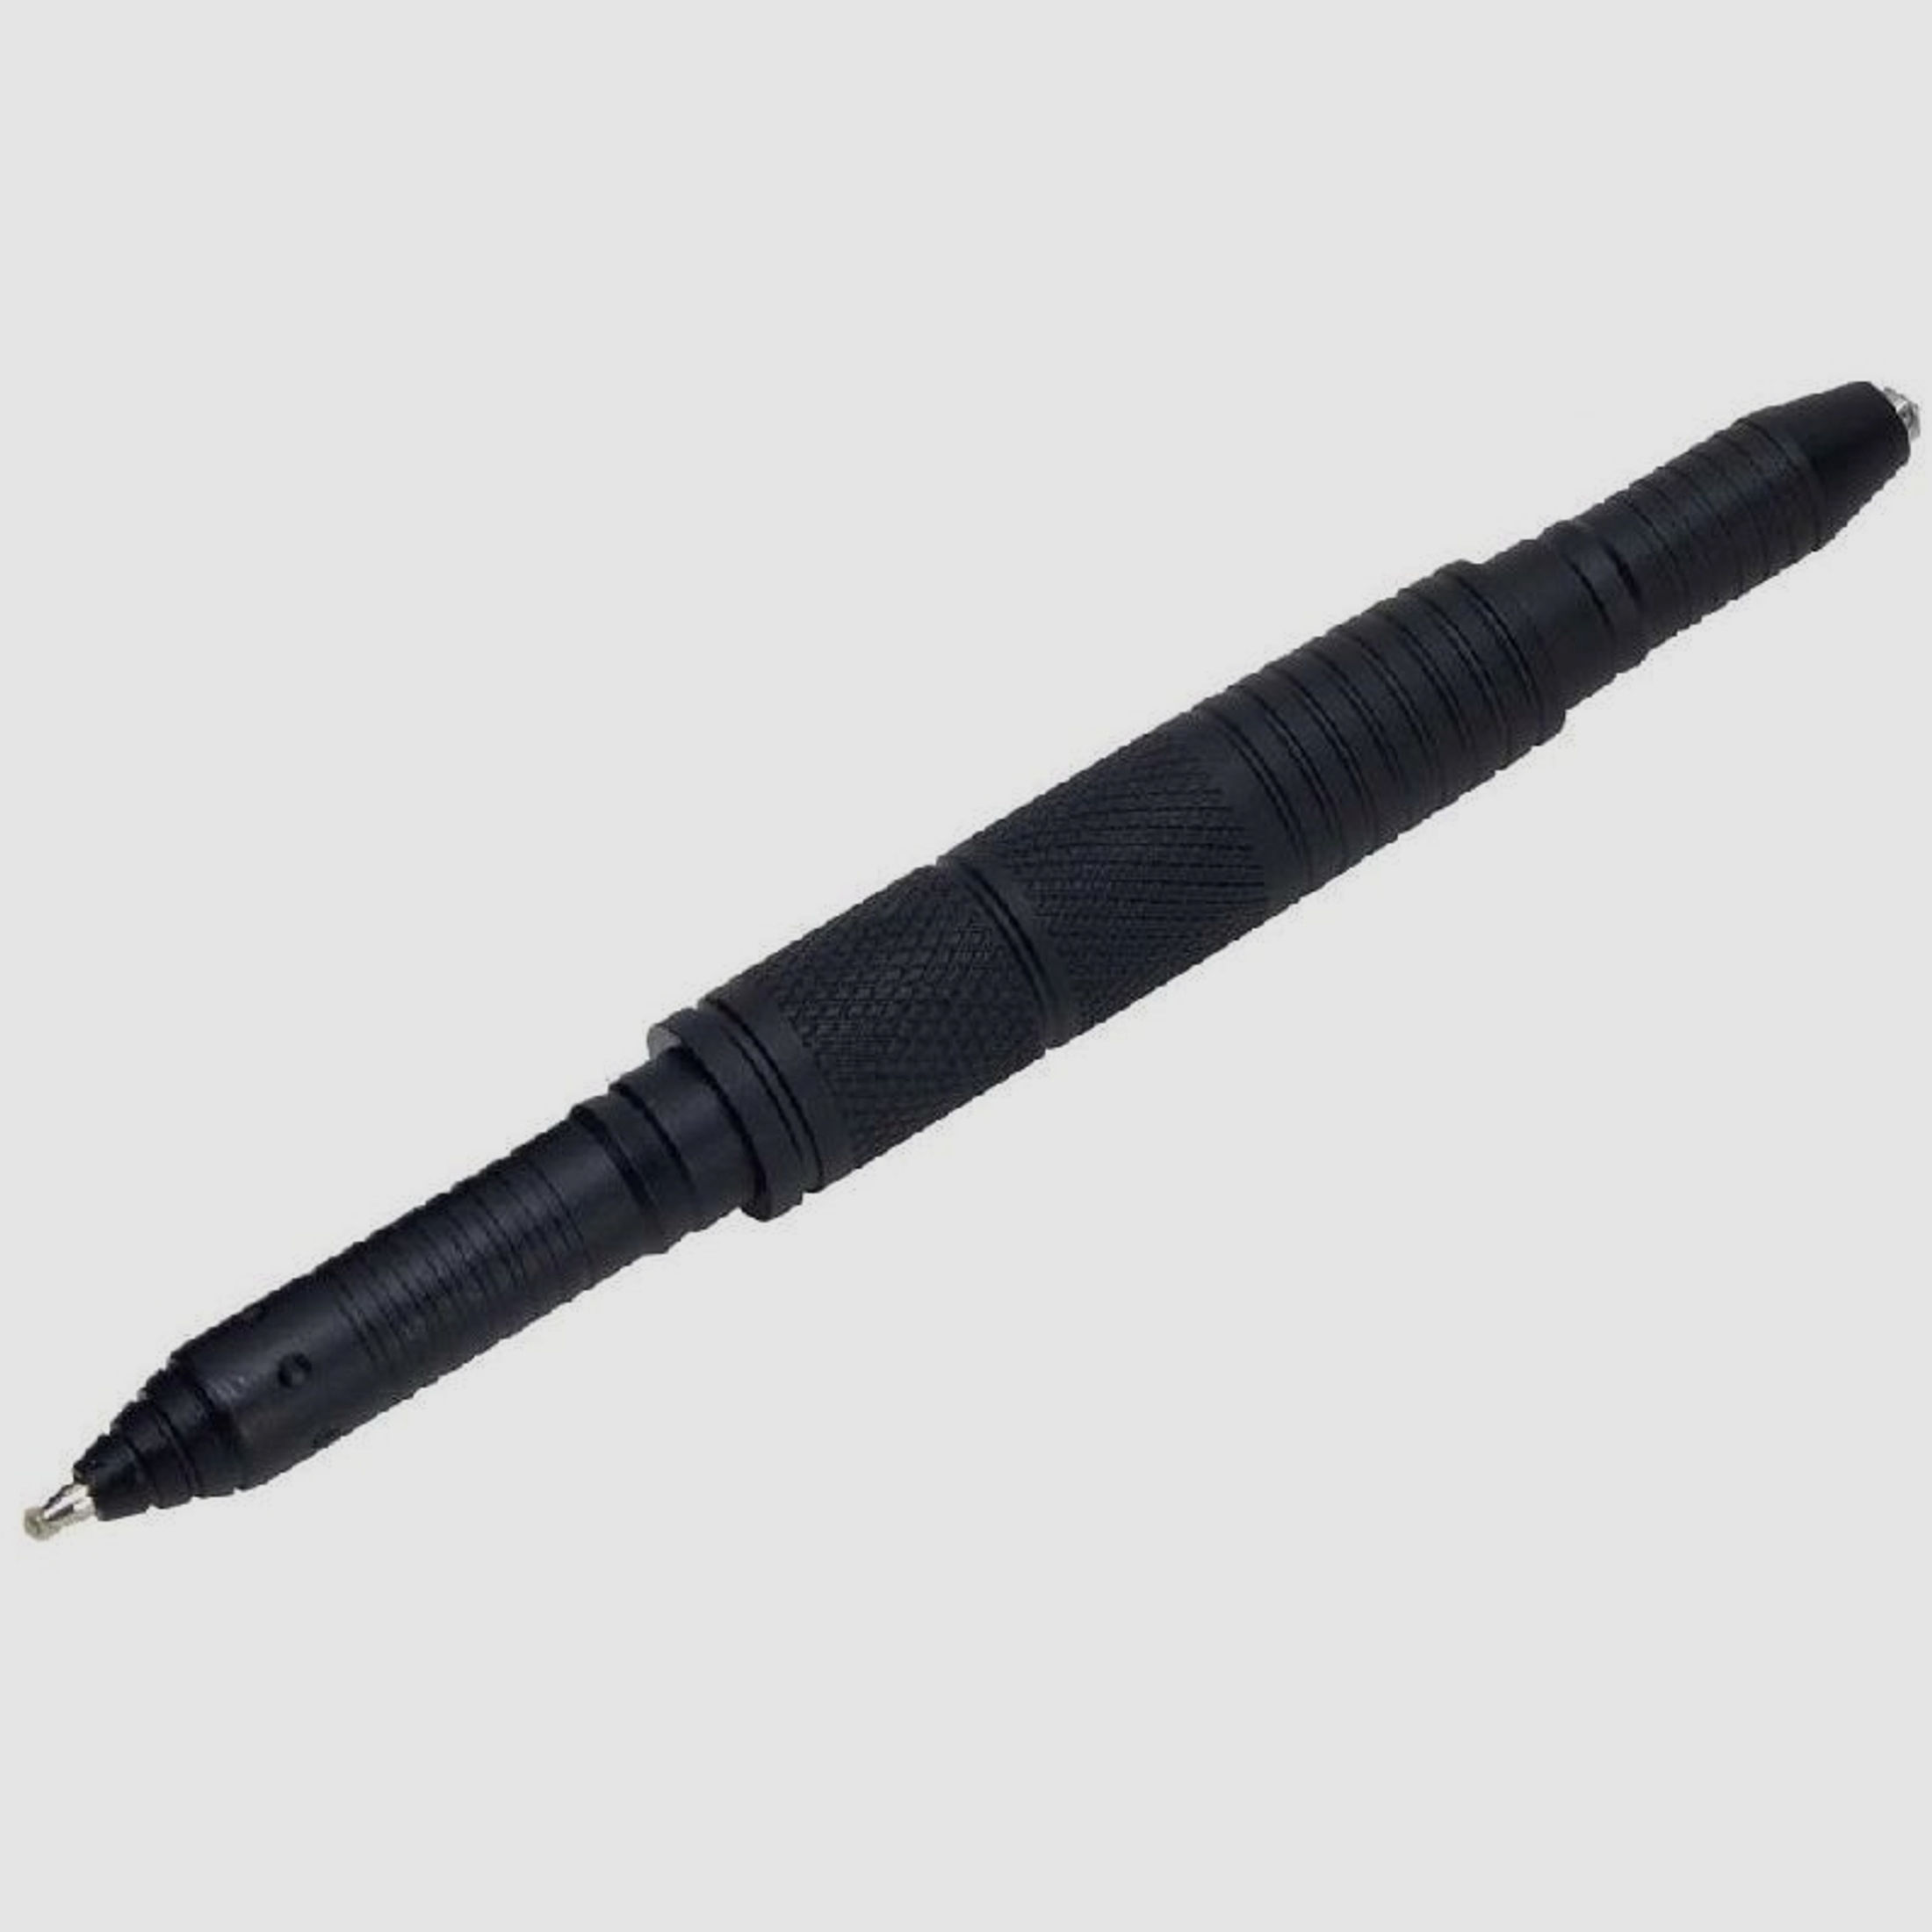 BlackField Tactical Pen